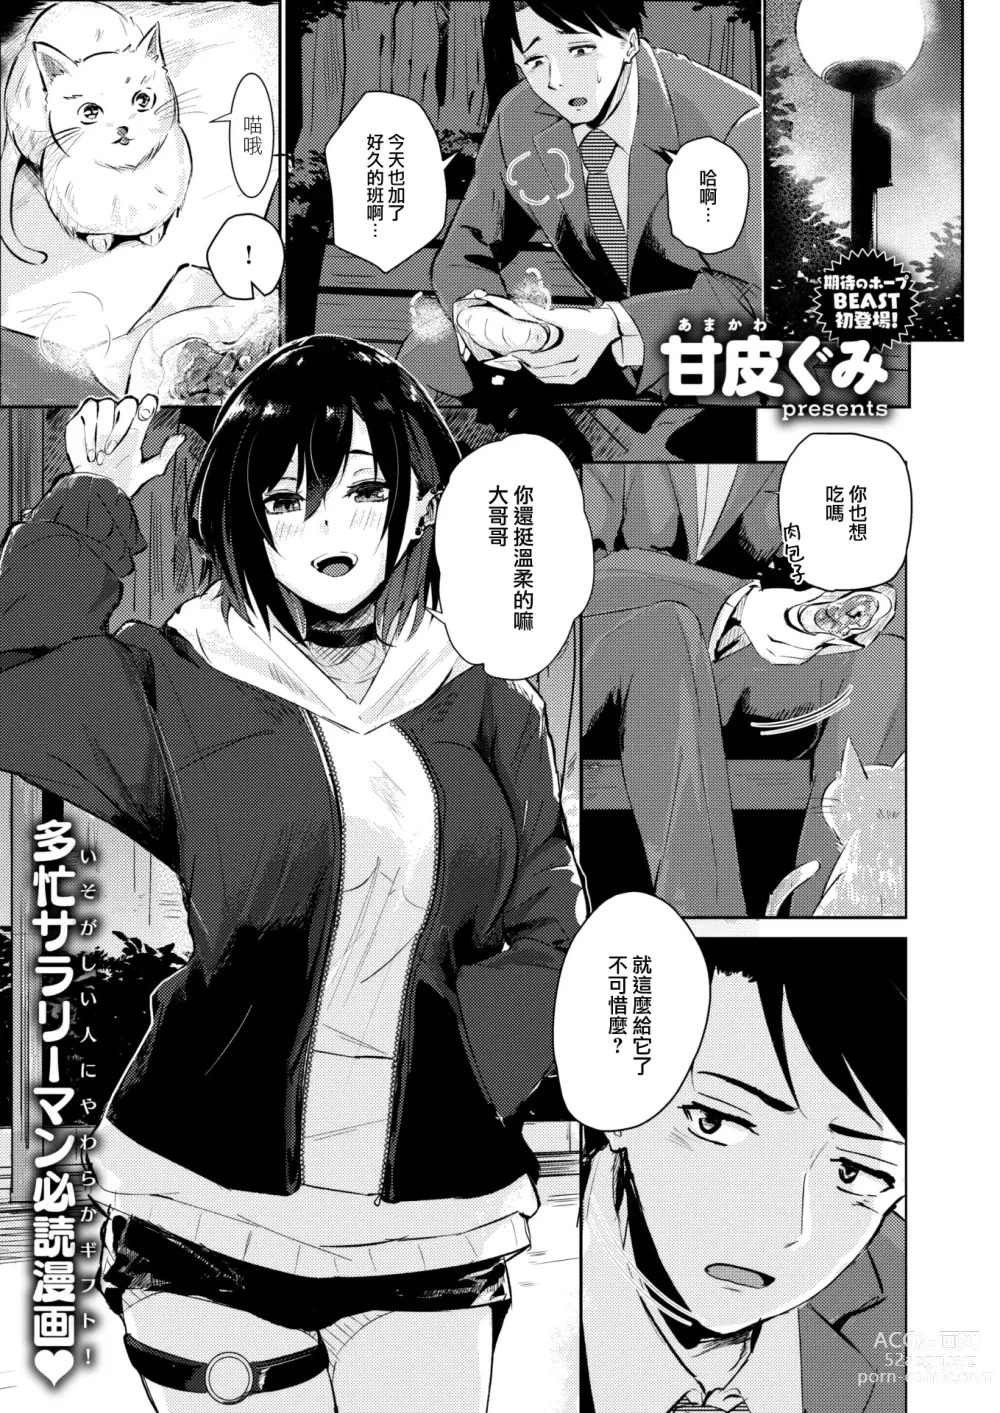 Page 2 of manga Neko to Kimagure